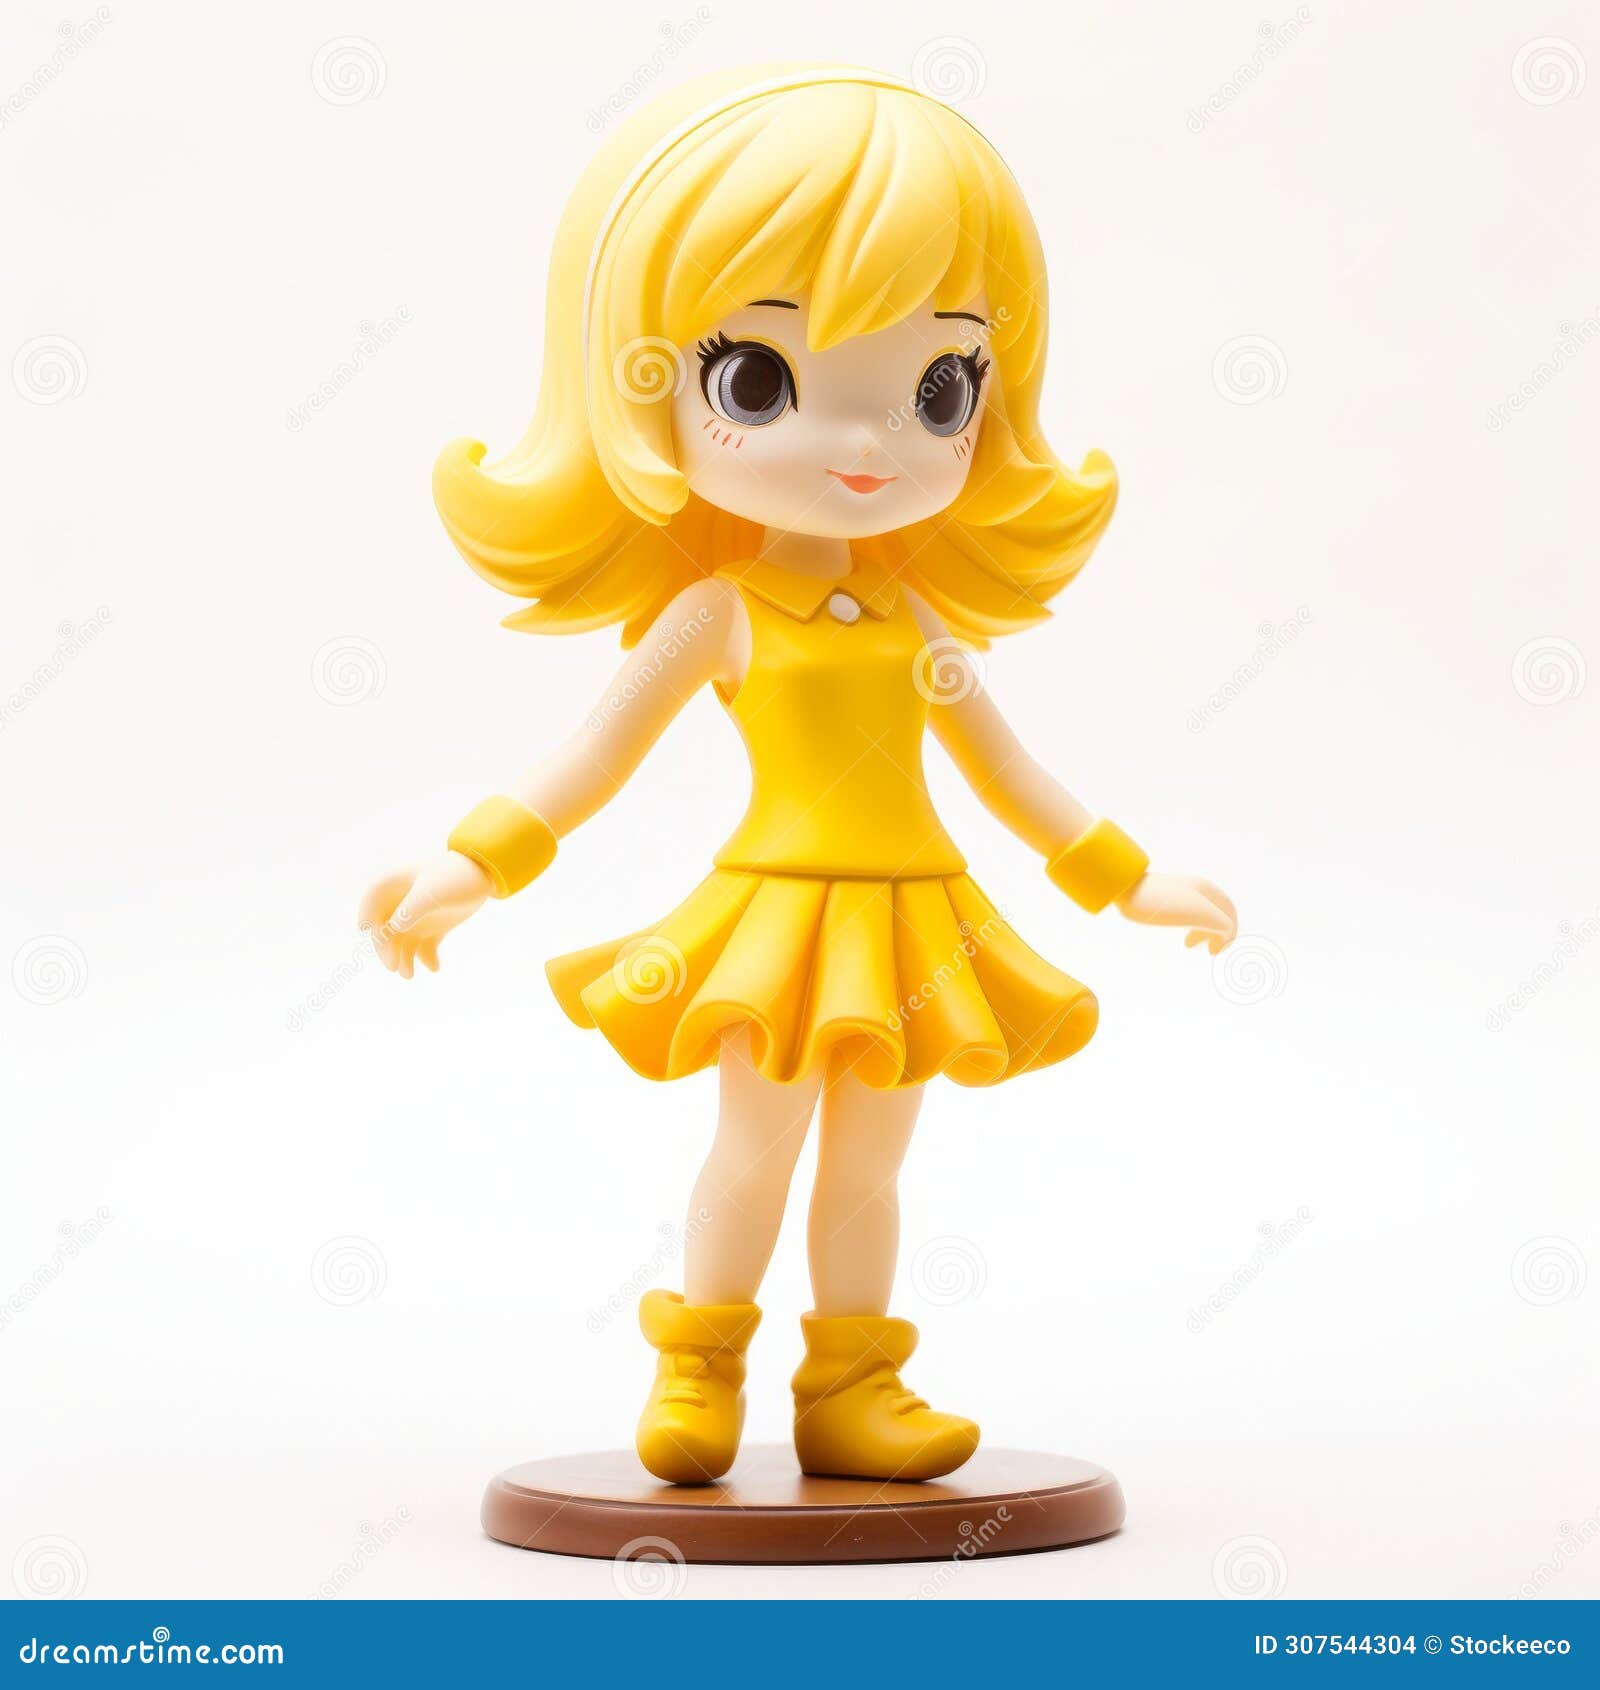 anime-inspired yellow dress girl figurine